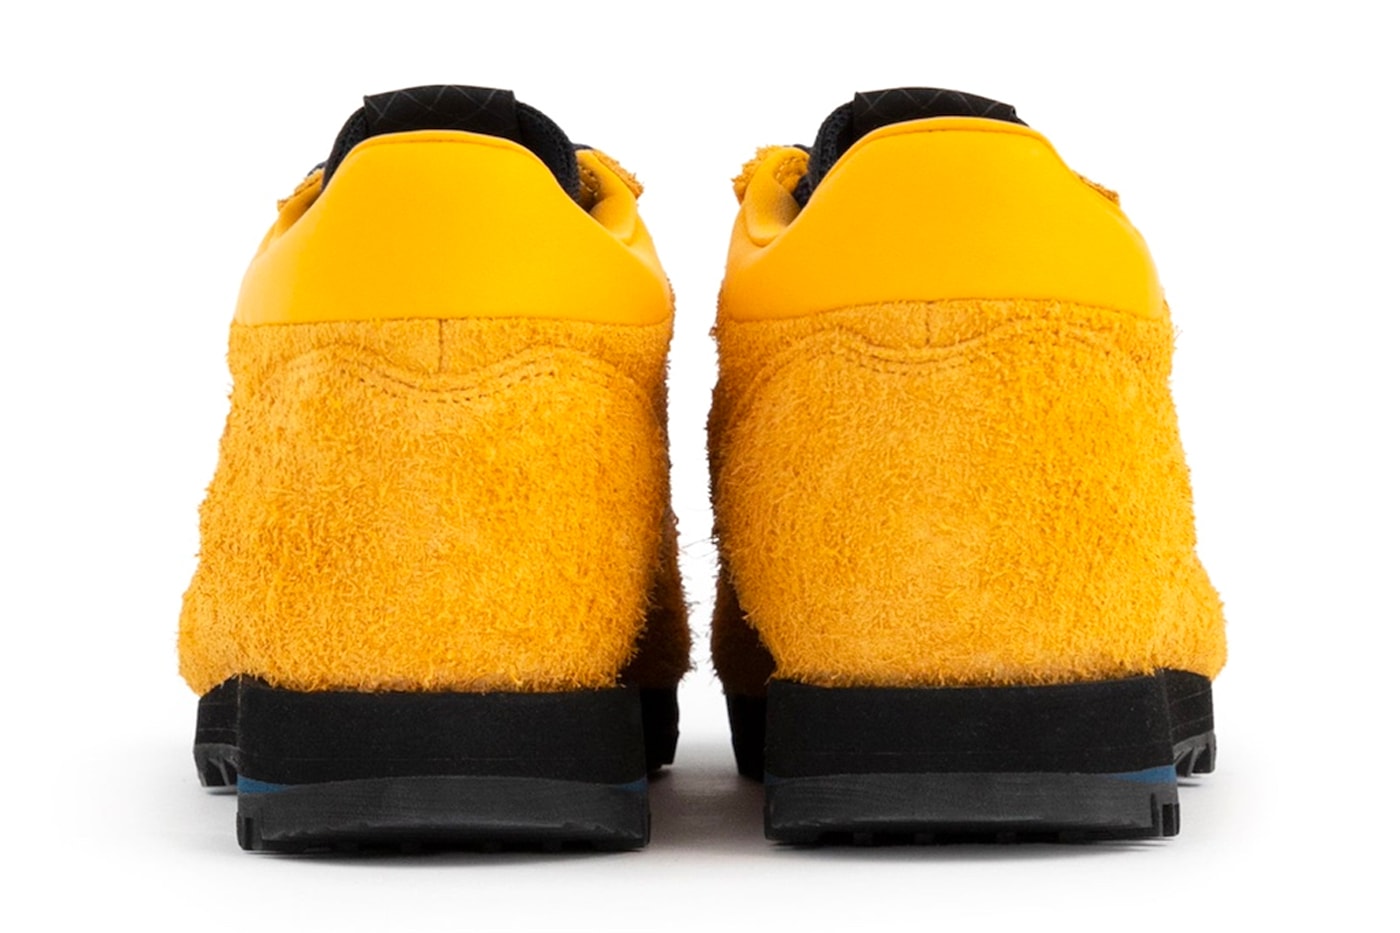 Aimé Leon Dore Drops New Balance Rainier Low Pack ald походная обувь замшевая nb Dynamic Duo походные ботинки